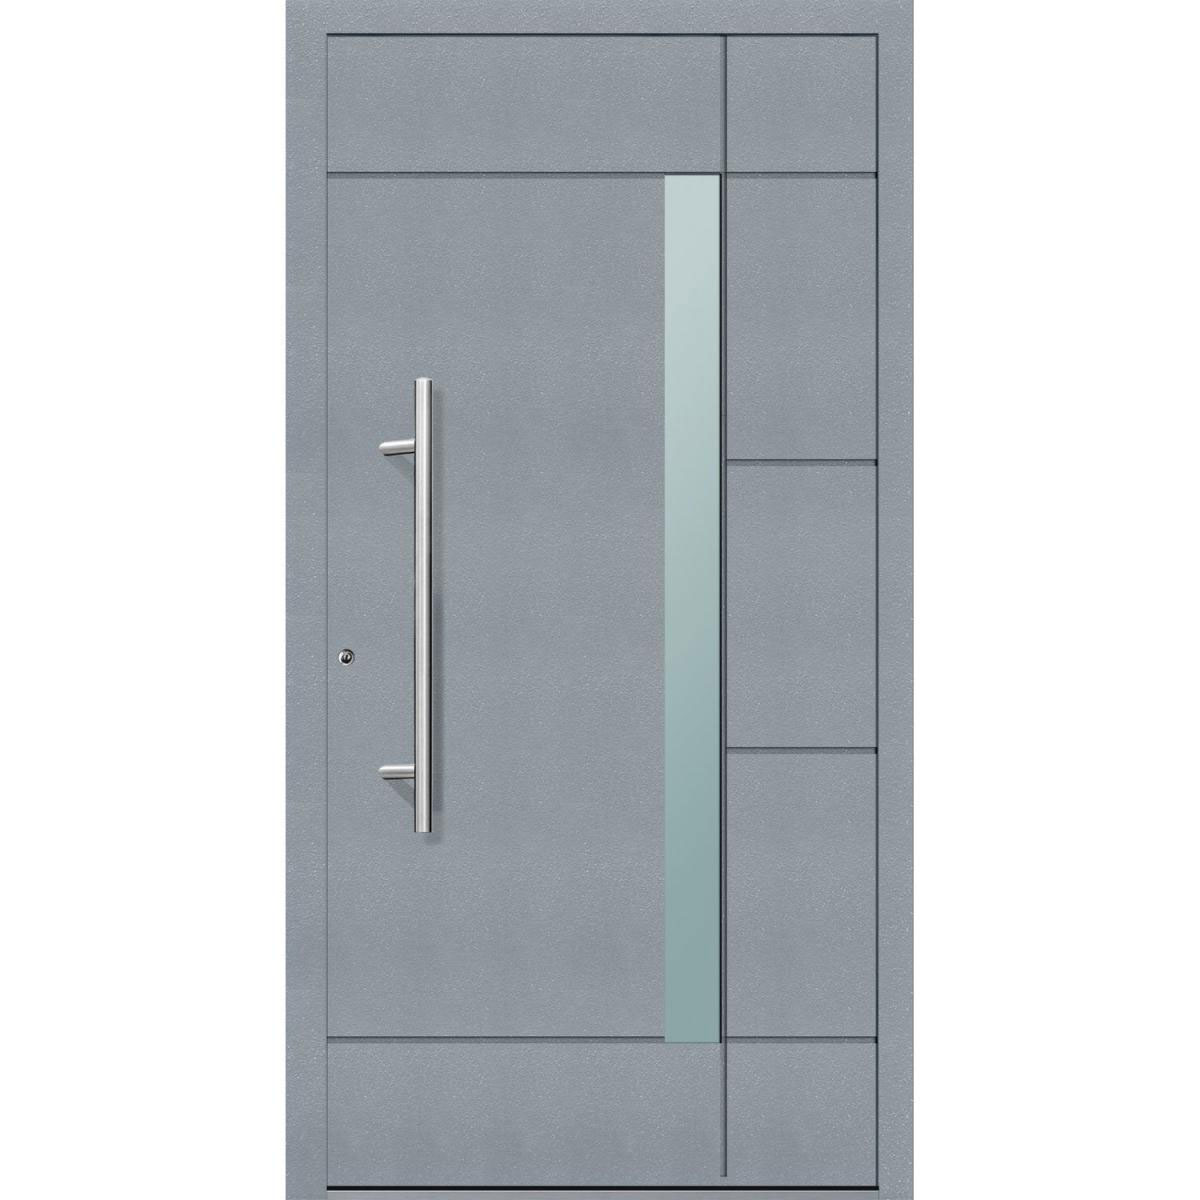 Aluminium Sicherheits-Haustür „Vicenza Exklusiv“, 75mm, grau, 100x210 cm, Anschlag links, inkl. Griffset